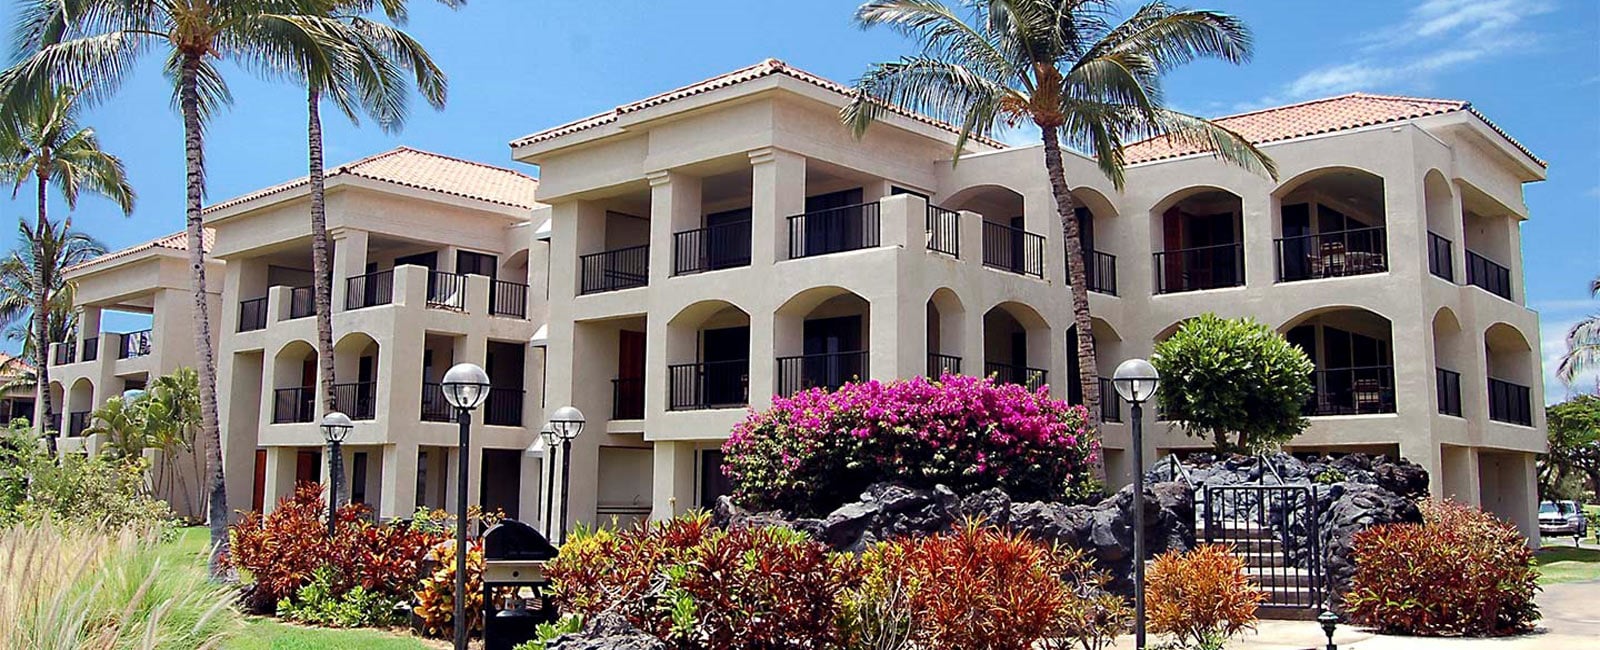 Exterior of The Bay Club at Waikoloa Beach Resort in Hawaii